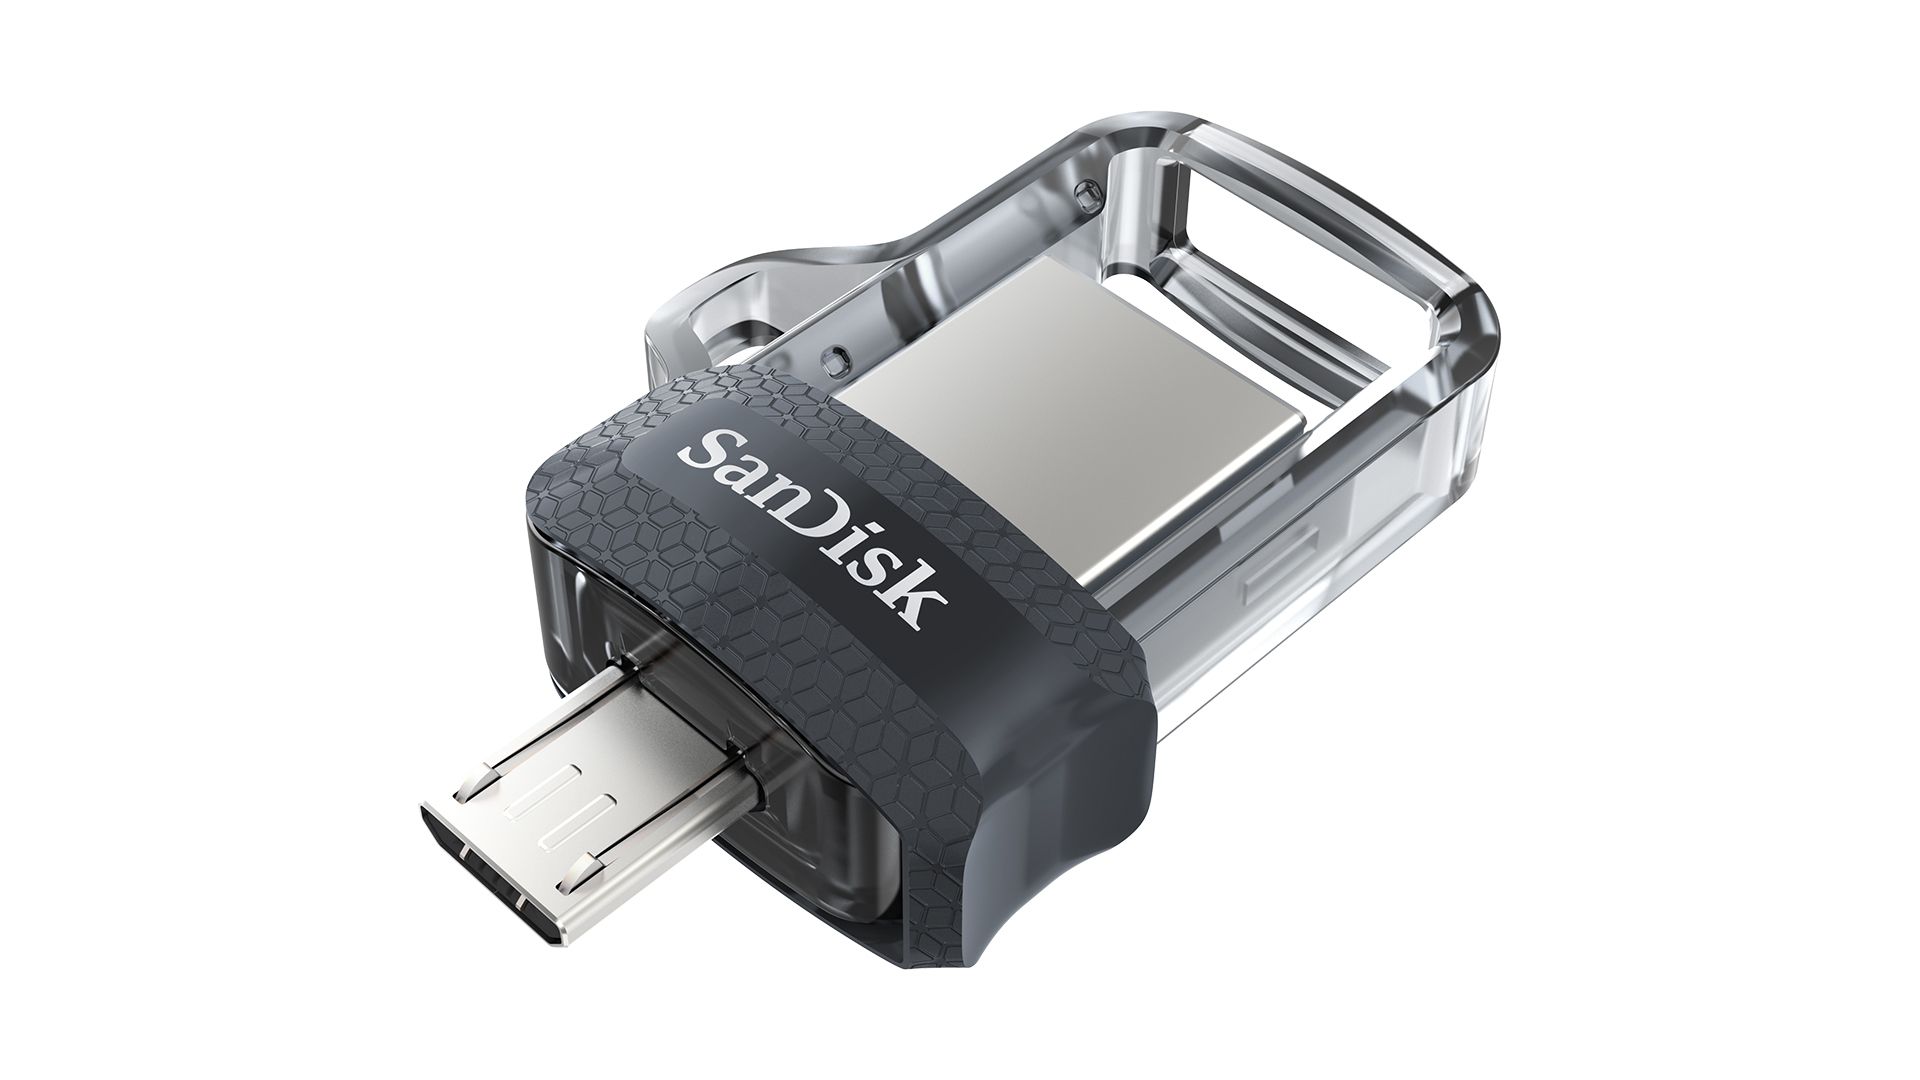 Sandisk Type-C Ultra USB 3.1 32 Go Clé USB Noir